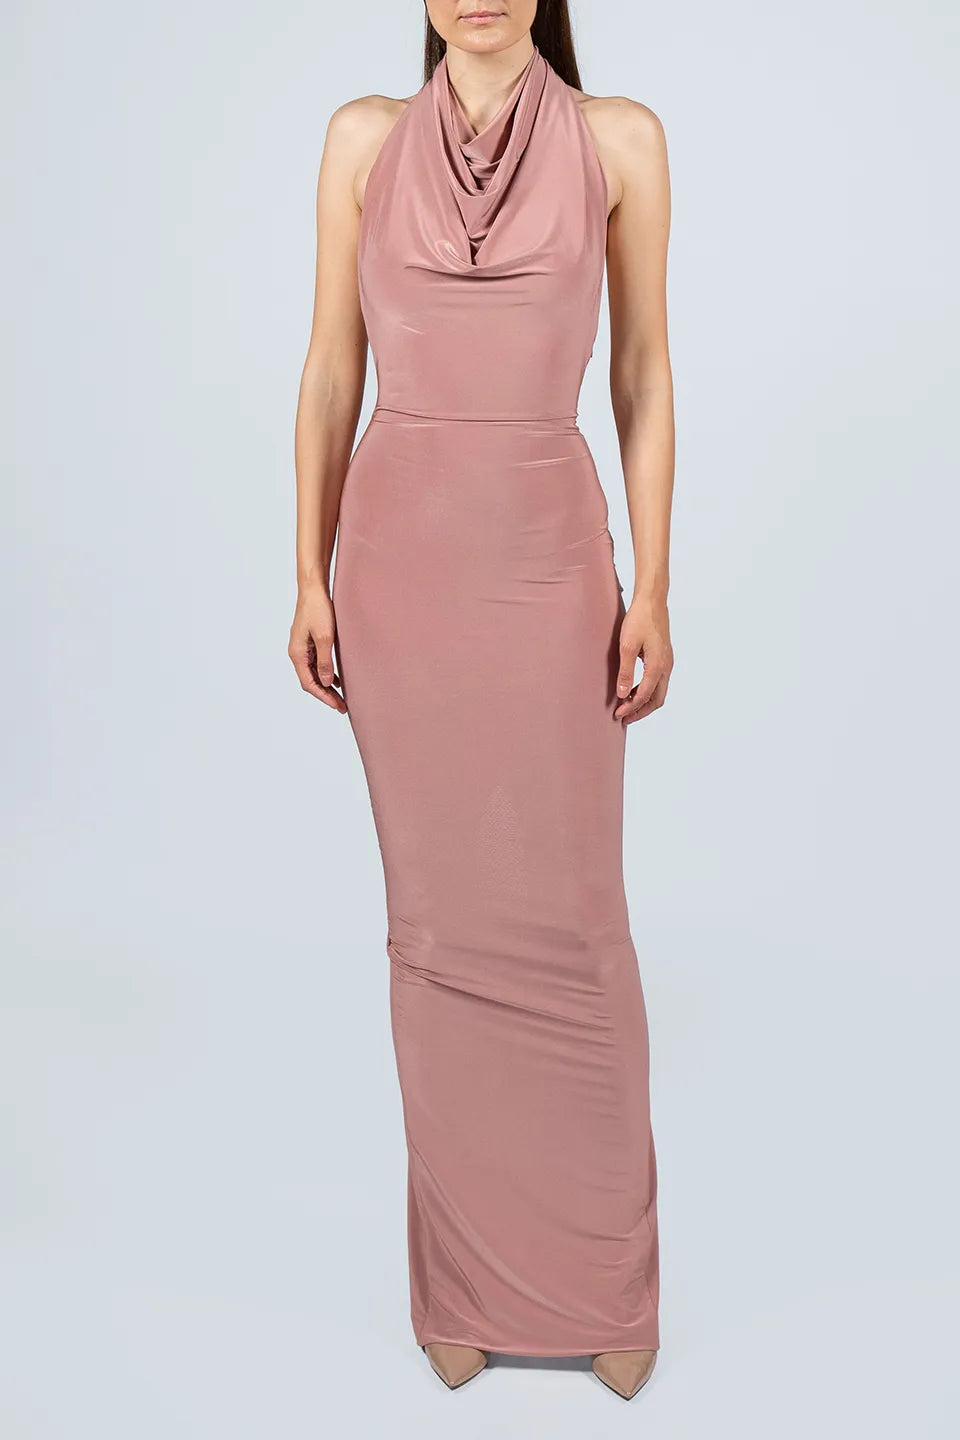 Shop online trendy Pink Maxi dresses from Hamel Fashion designer. Product gallery 1